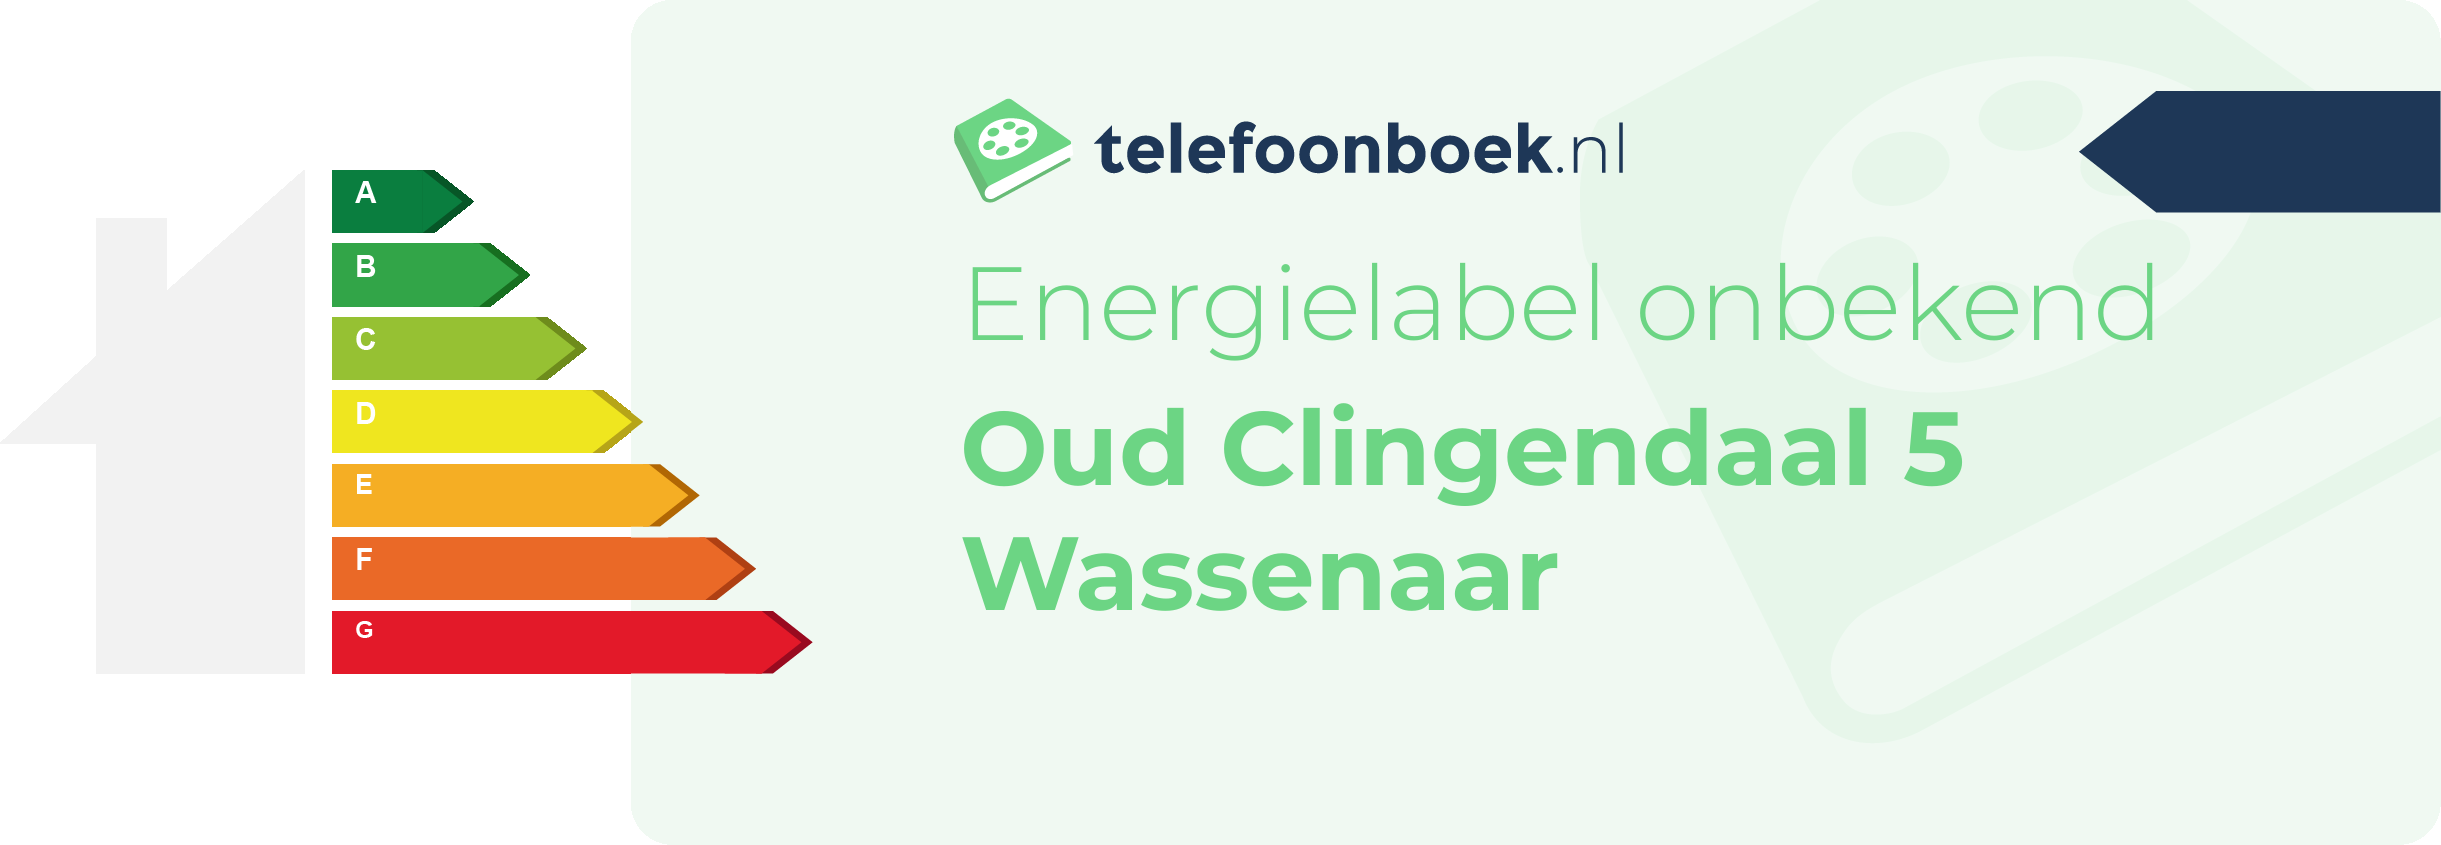 Energielabel Oud Clingendaal 5 Wassenaar